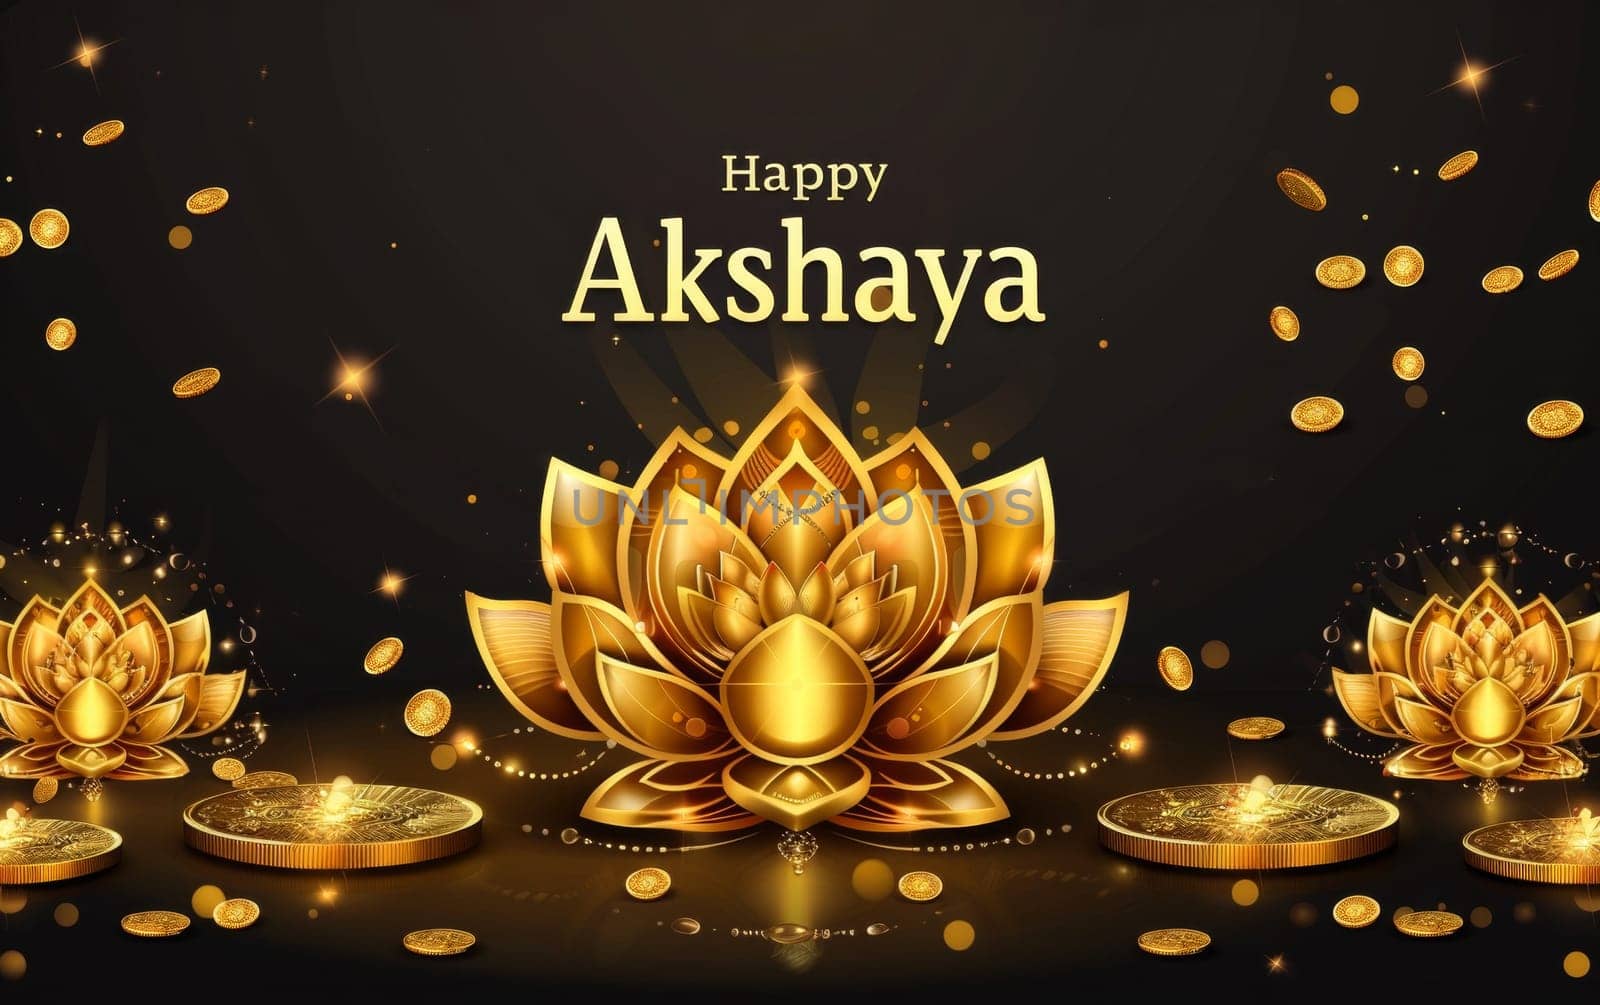 Celebratory image for Akshaya Tritiya showcasing a lotus and falling gold coins, symbolizing eternal wealth in Hindu culture